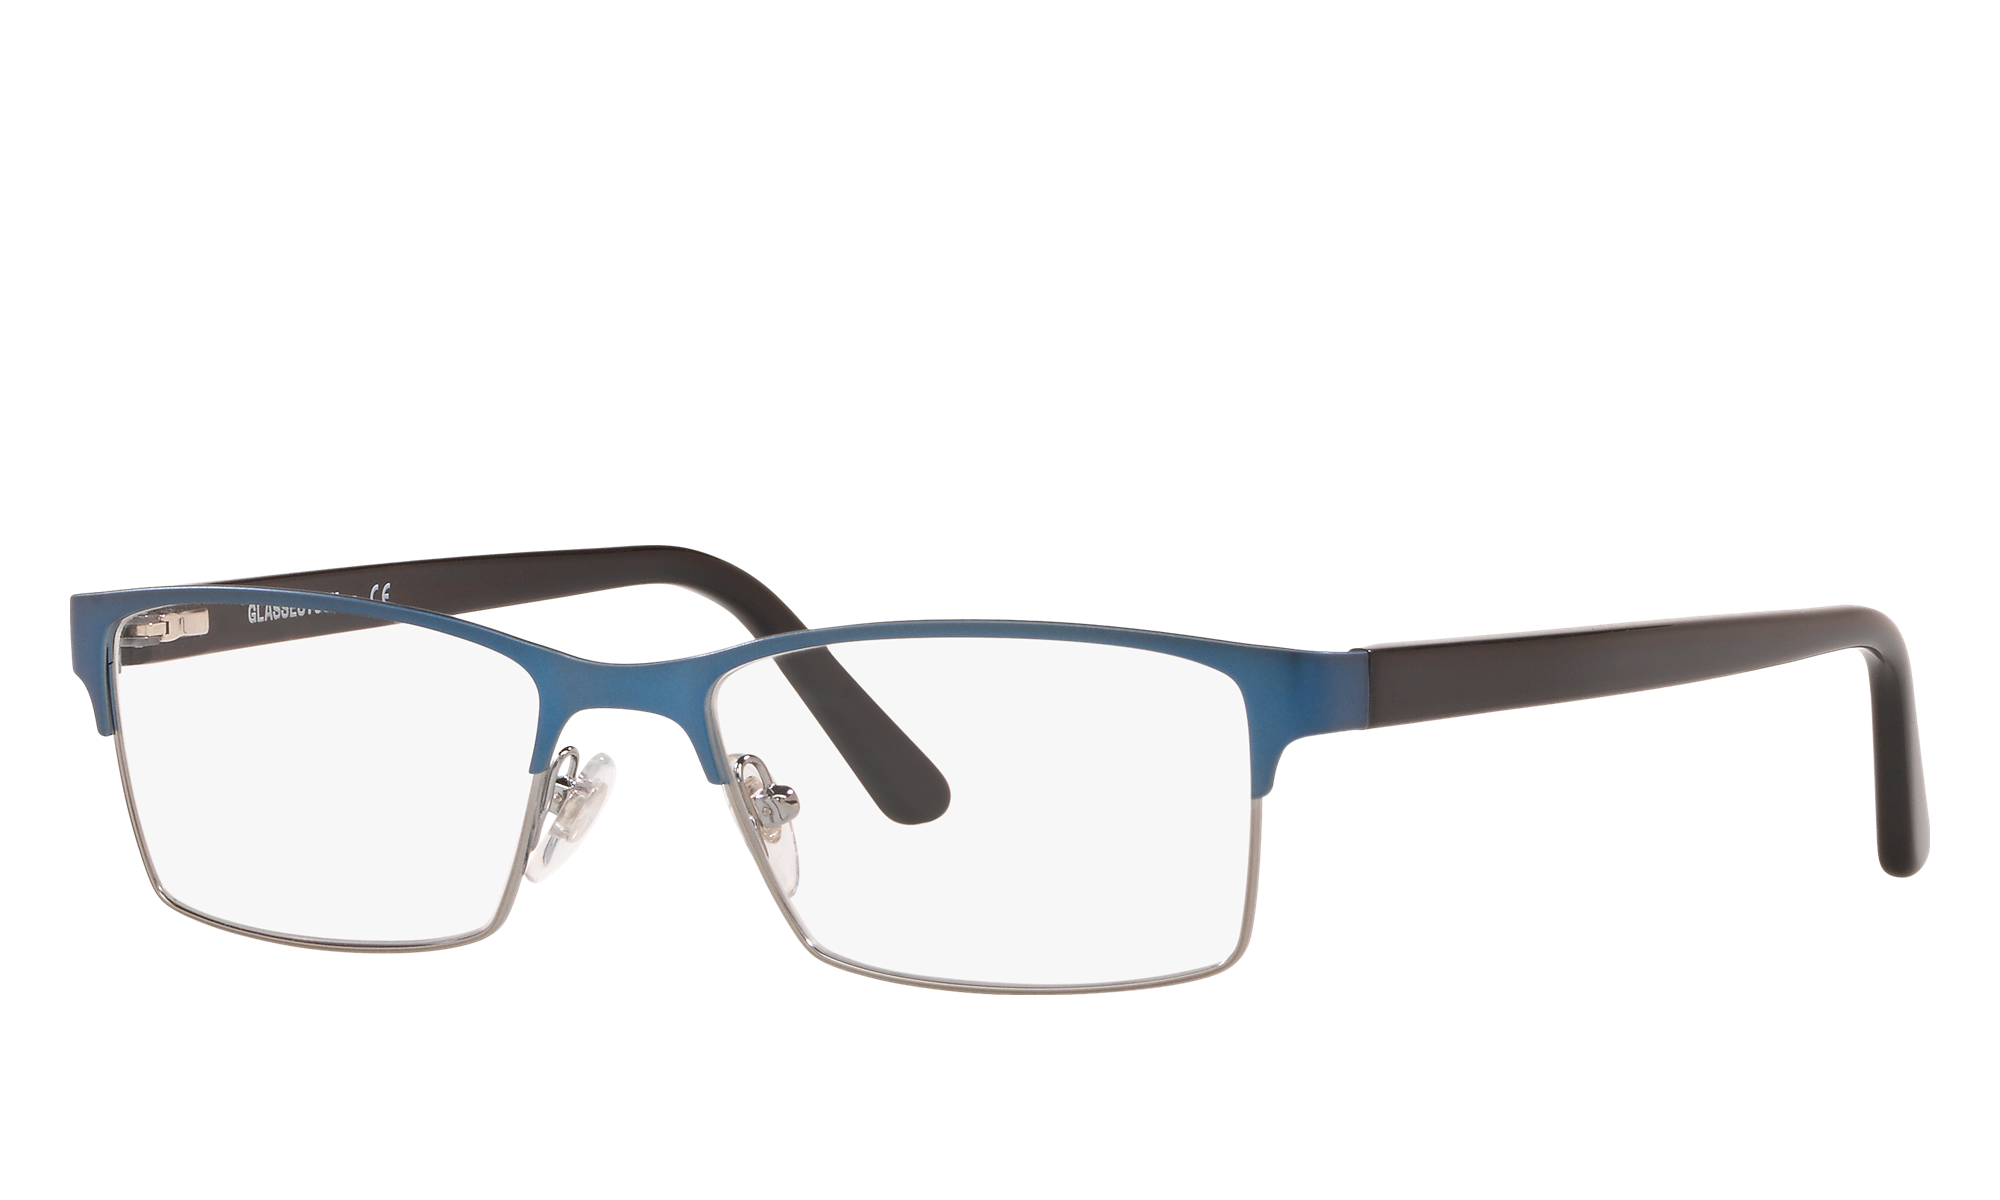 Glasses.com Unisex Gk1001 Gunmetal Matte Blue Size: Standard